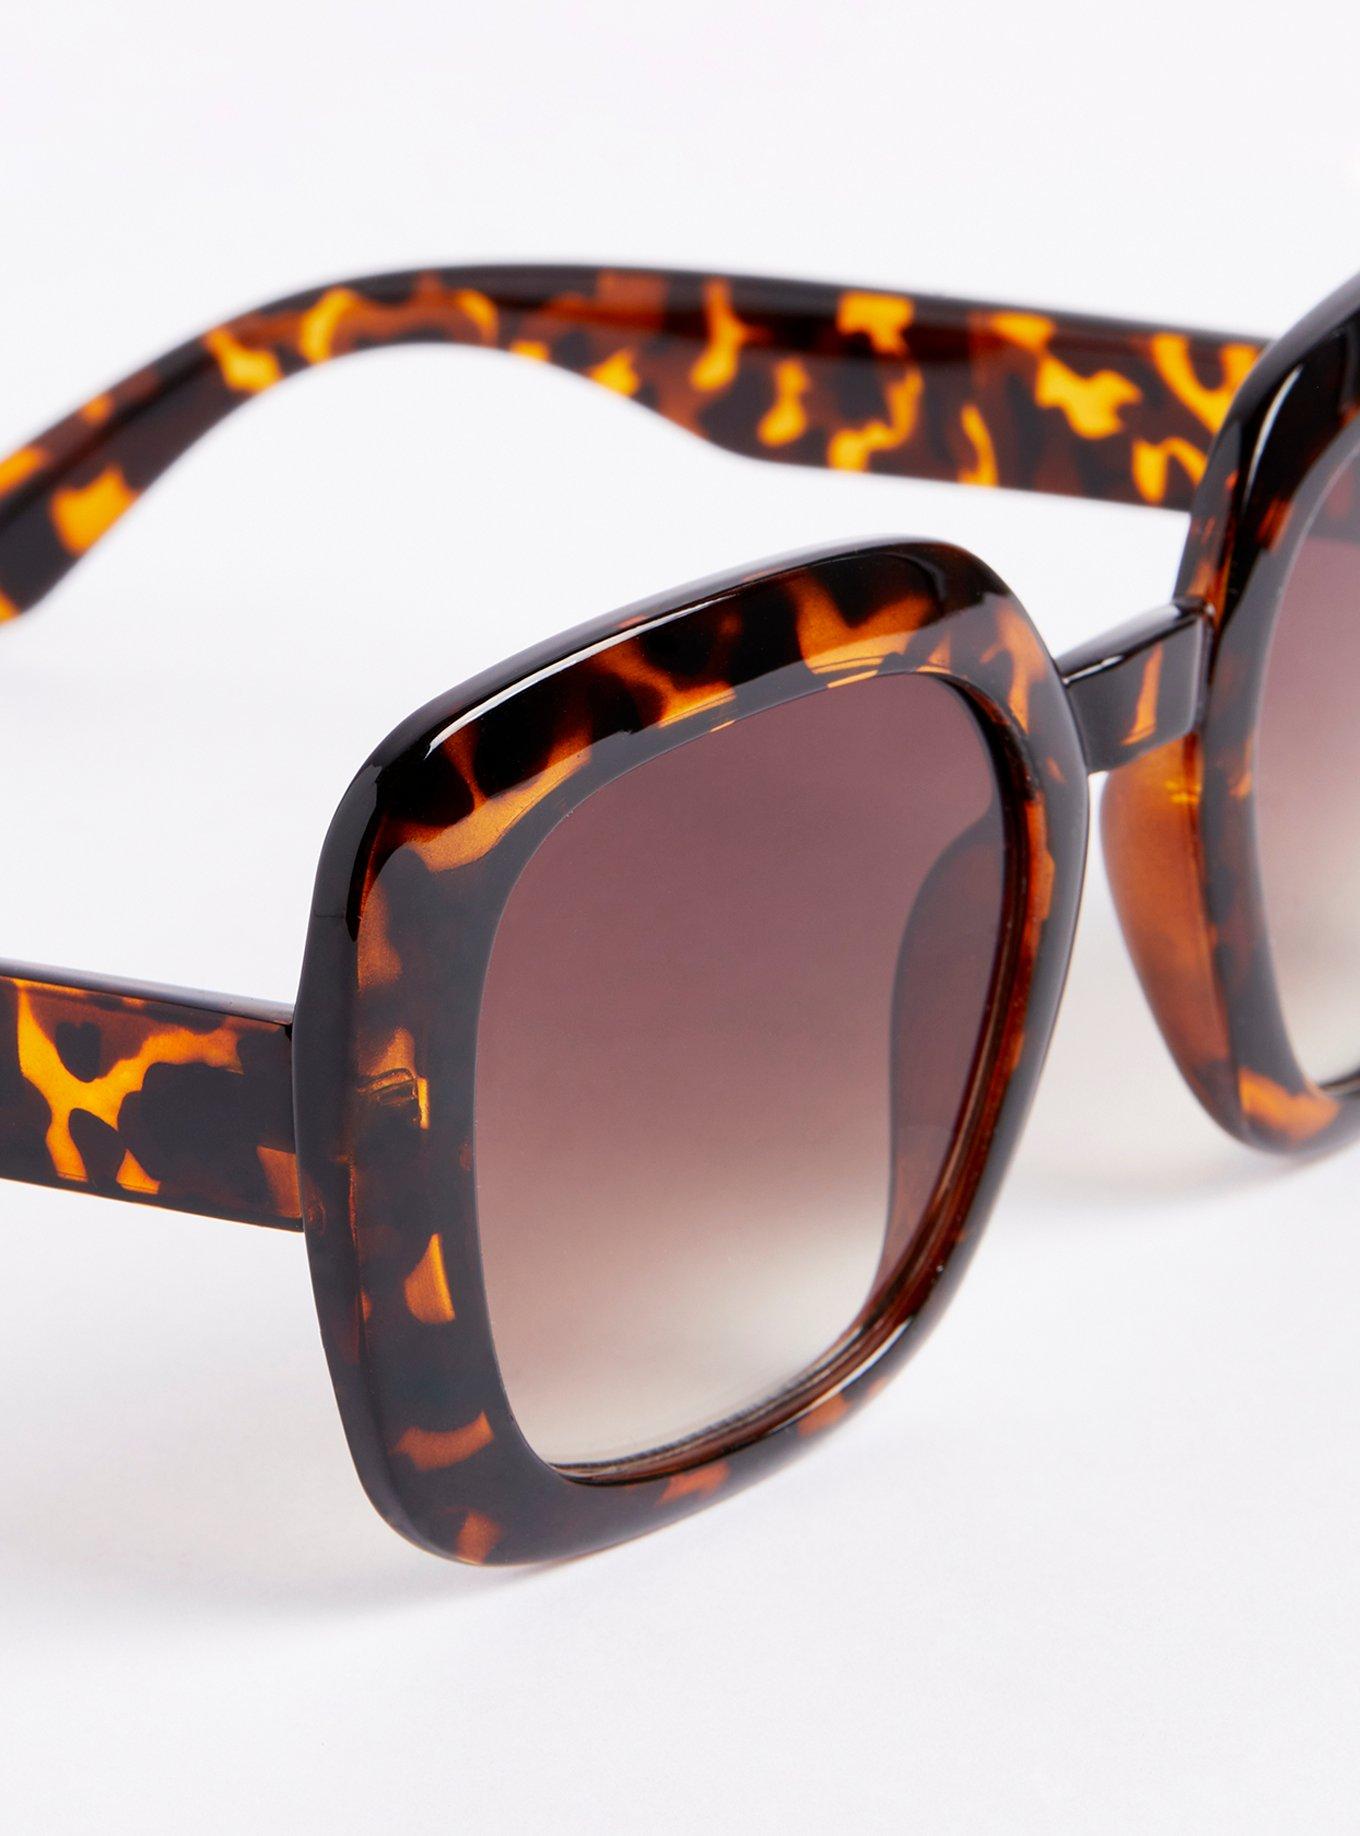 Plus Size - Black Square Oversized Sunglasses - Torrid